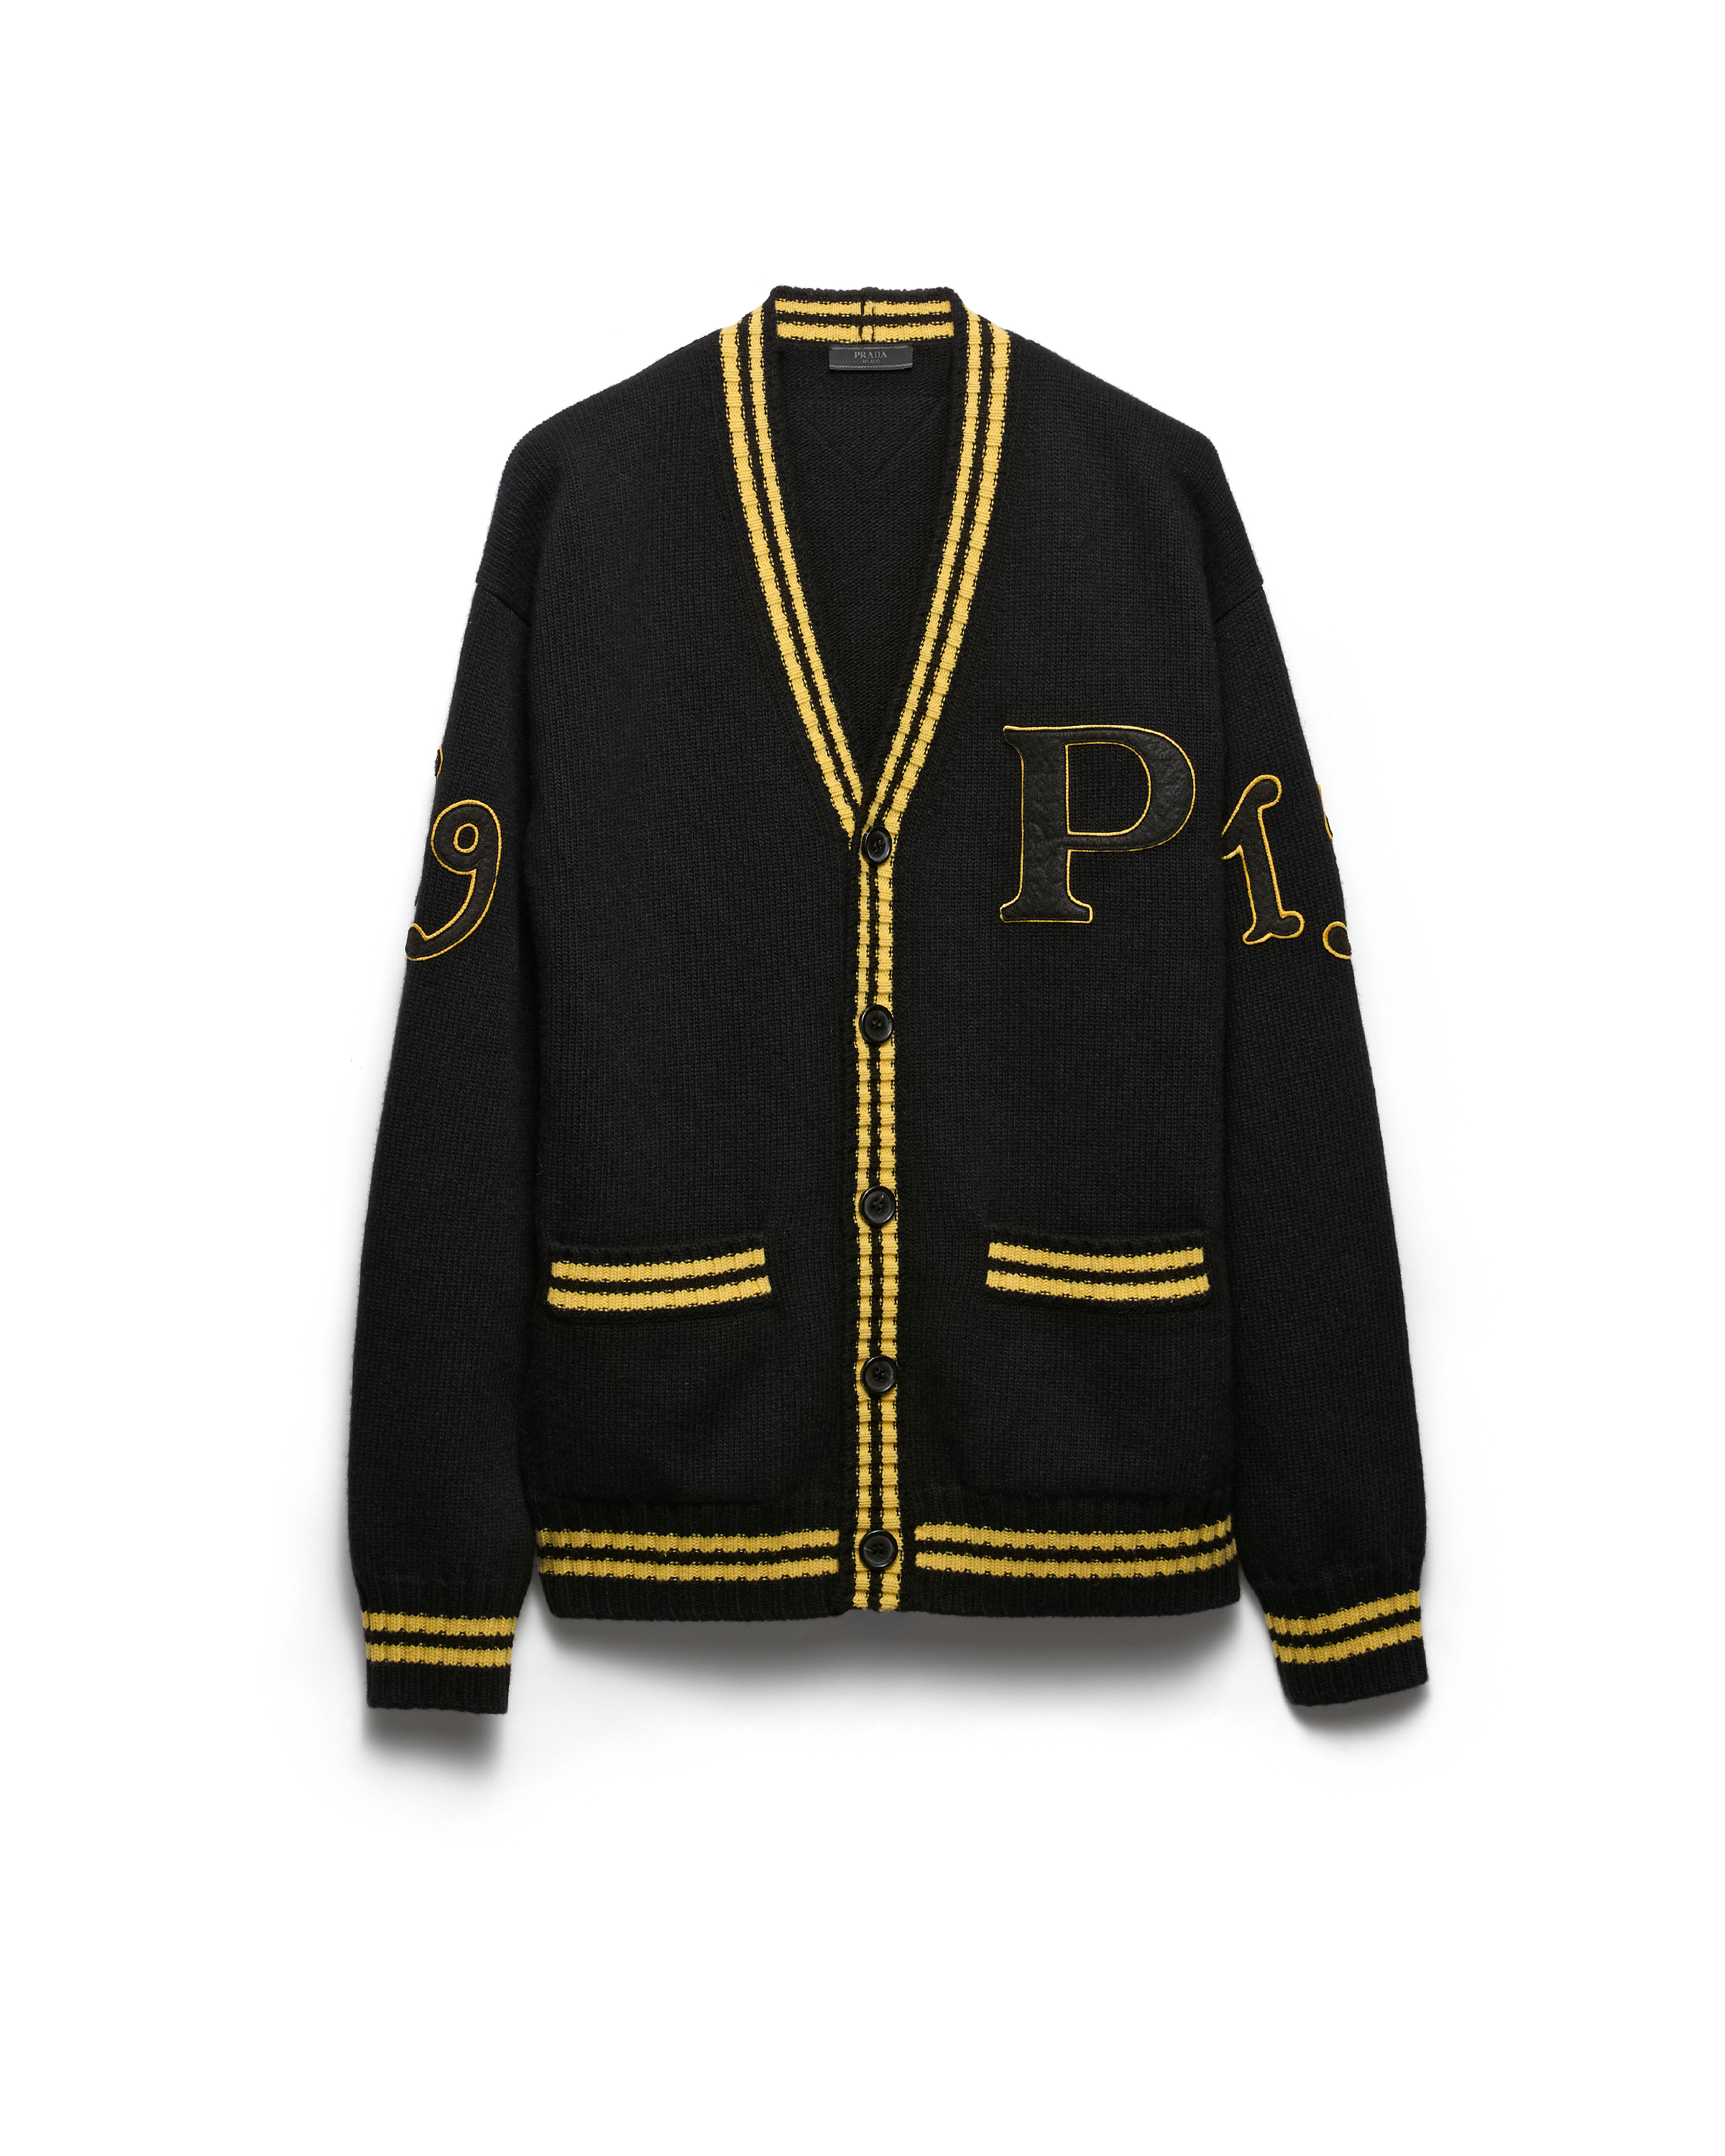 Prada's 1913 menswear capsule, including white varsity jacket, black bomber and knit cardigan